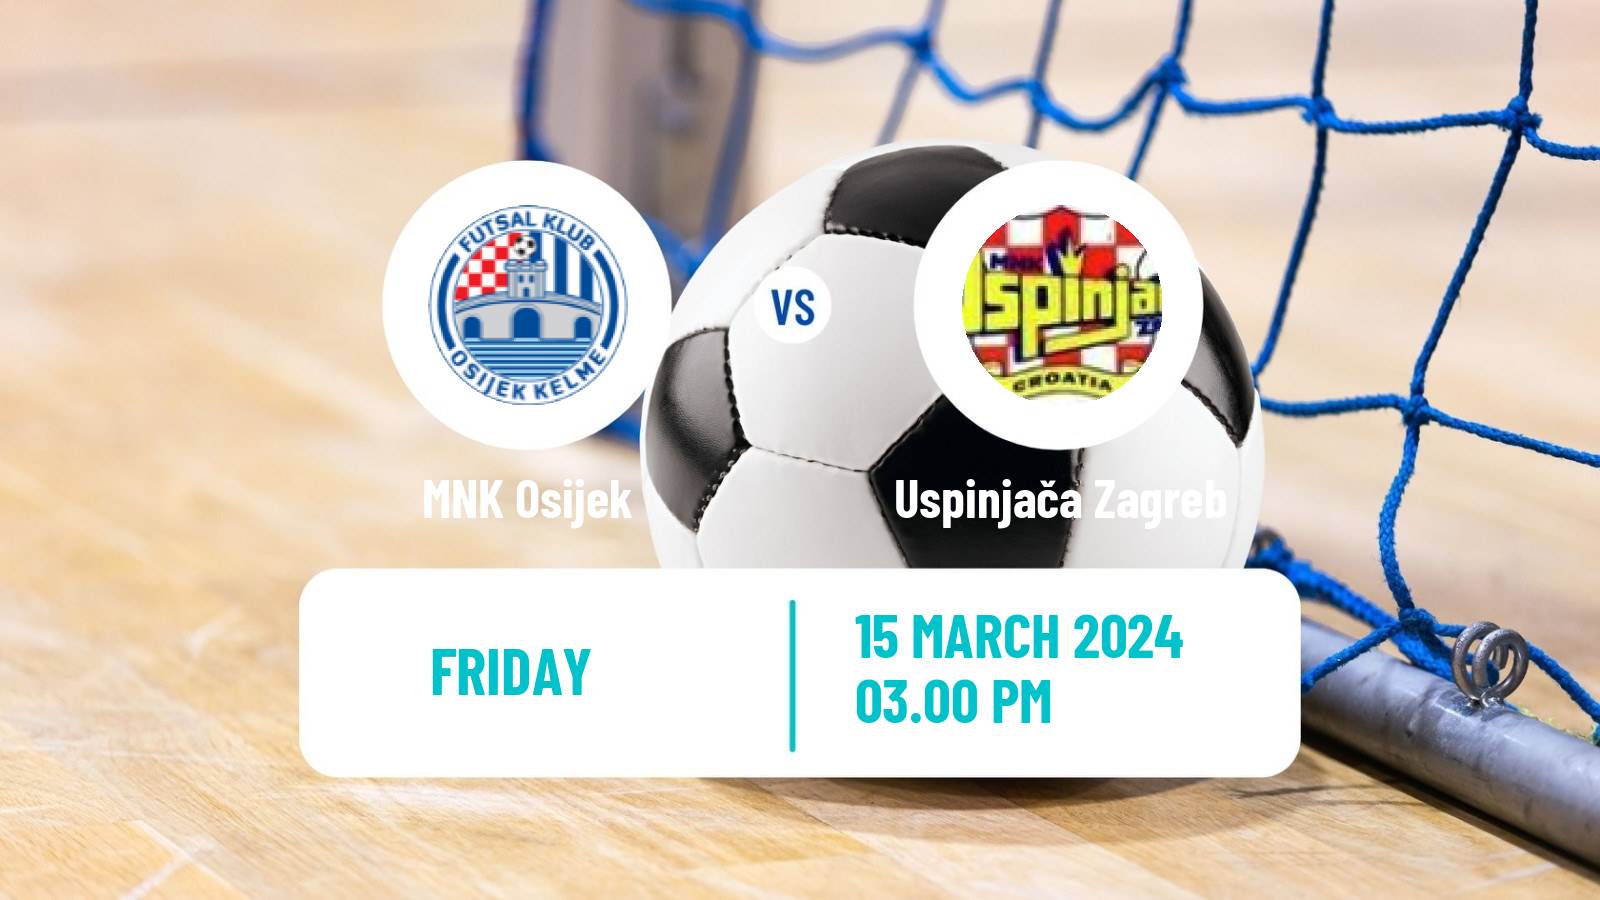 Futsal Croatian 1 HMNL Osijek - Uspinjača Zagreb